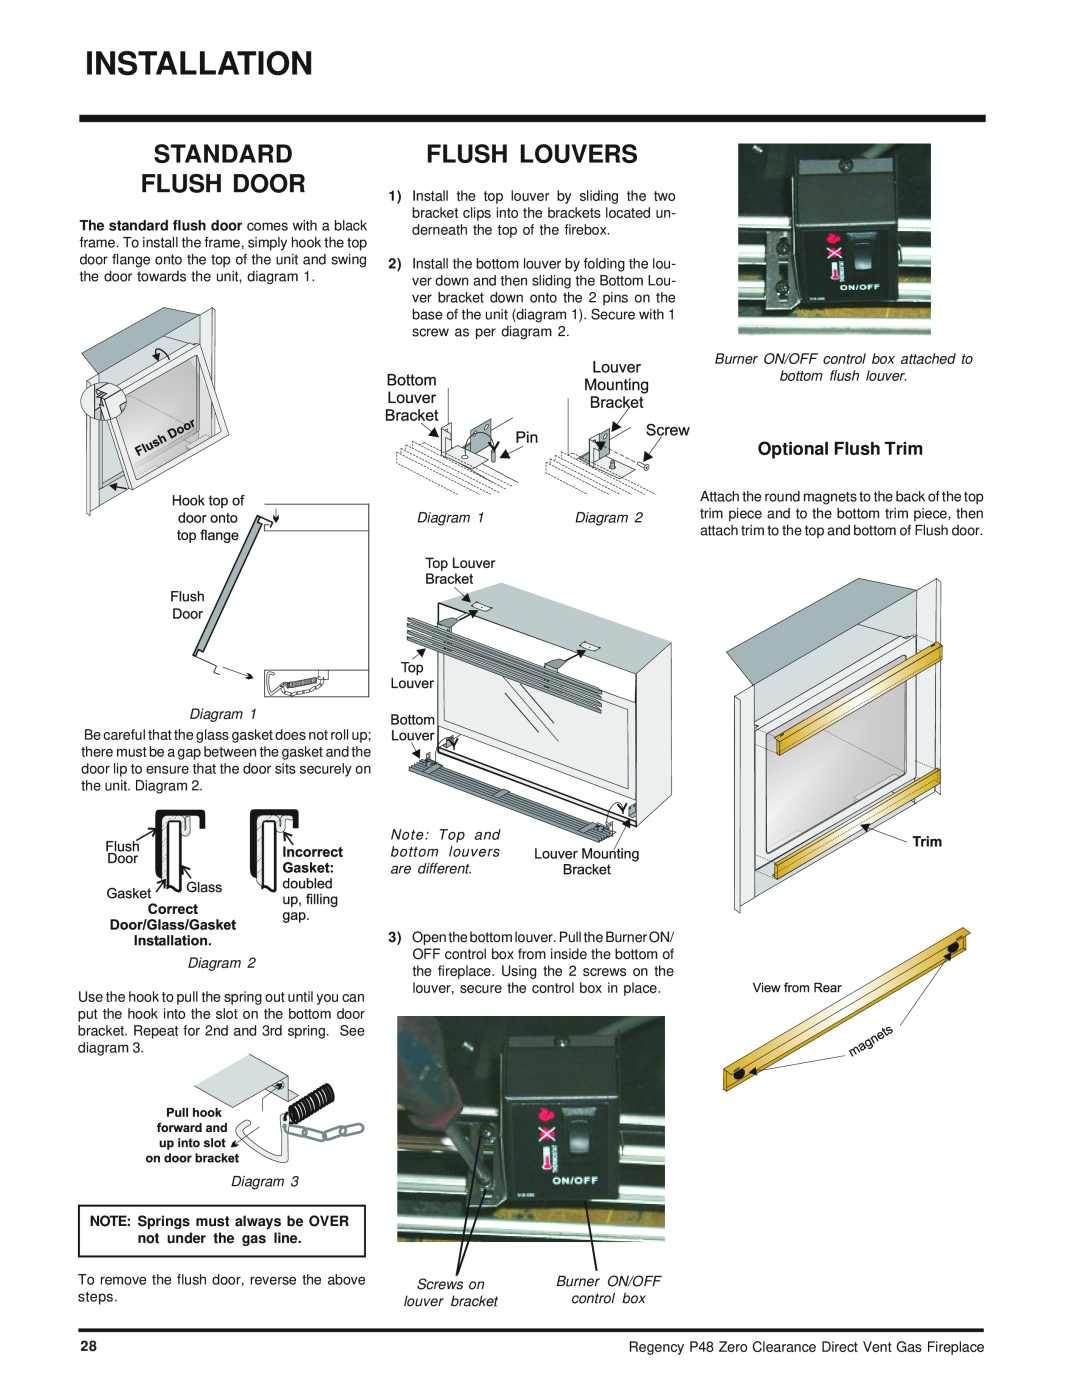 Regency P48-NG Standard Flush Door, Flush Louvers, Optional Flush Trim, Burner ON/OFF control box attached to, Diagram 